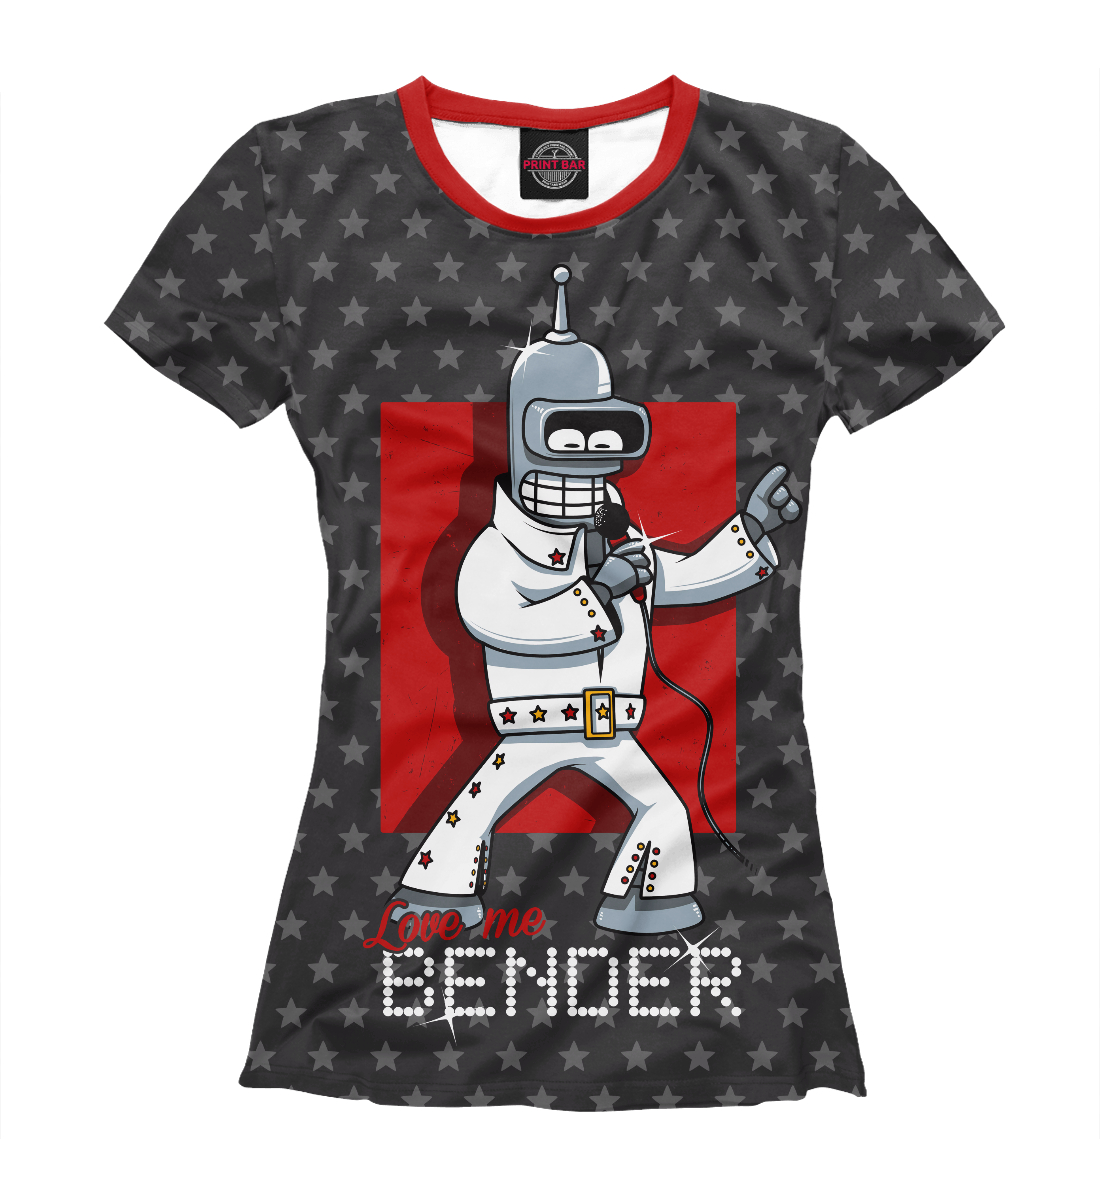 Футболка Bender Presley для девочек, артикул: FUT-407946-fut-1mp